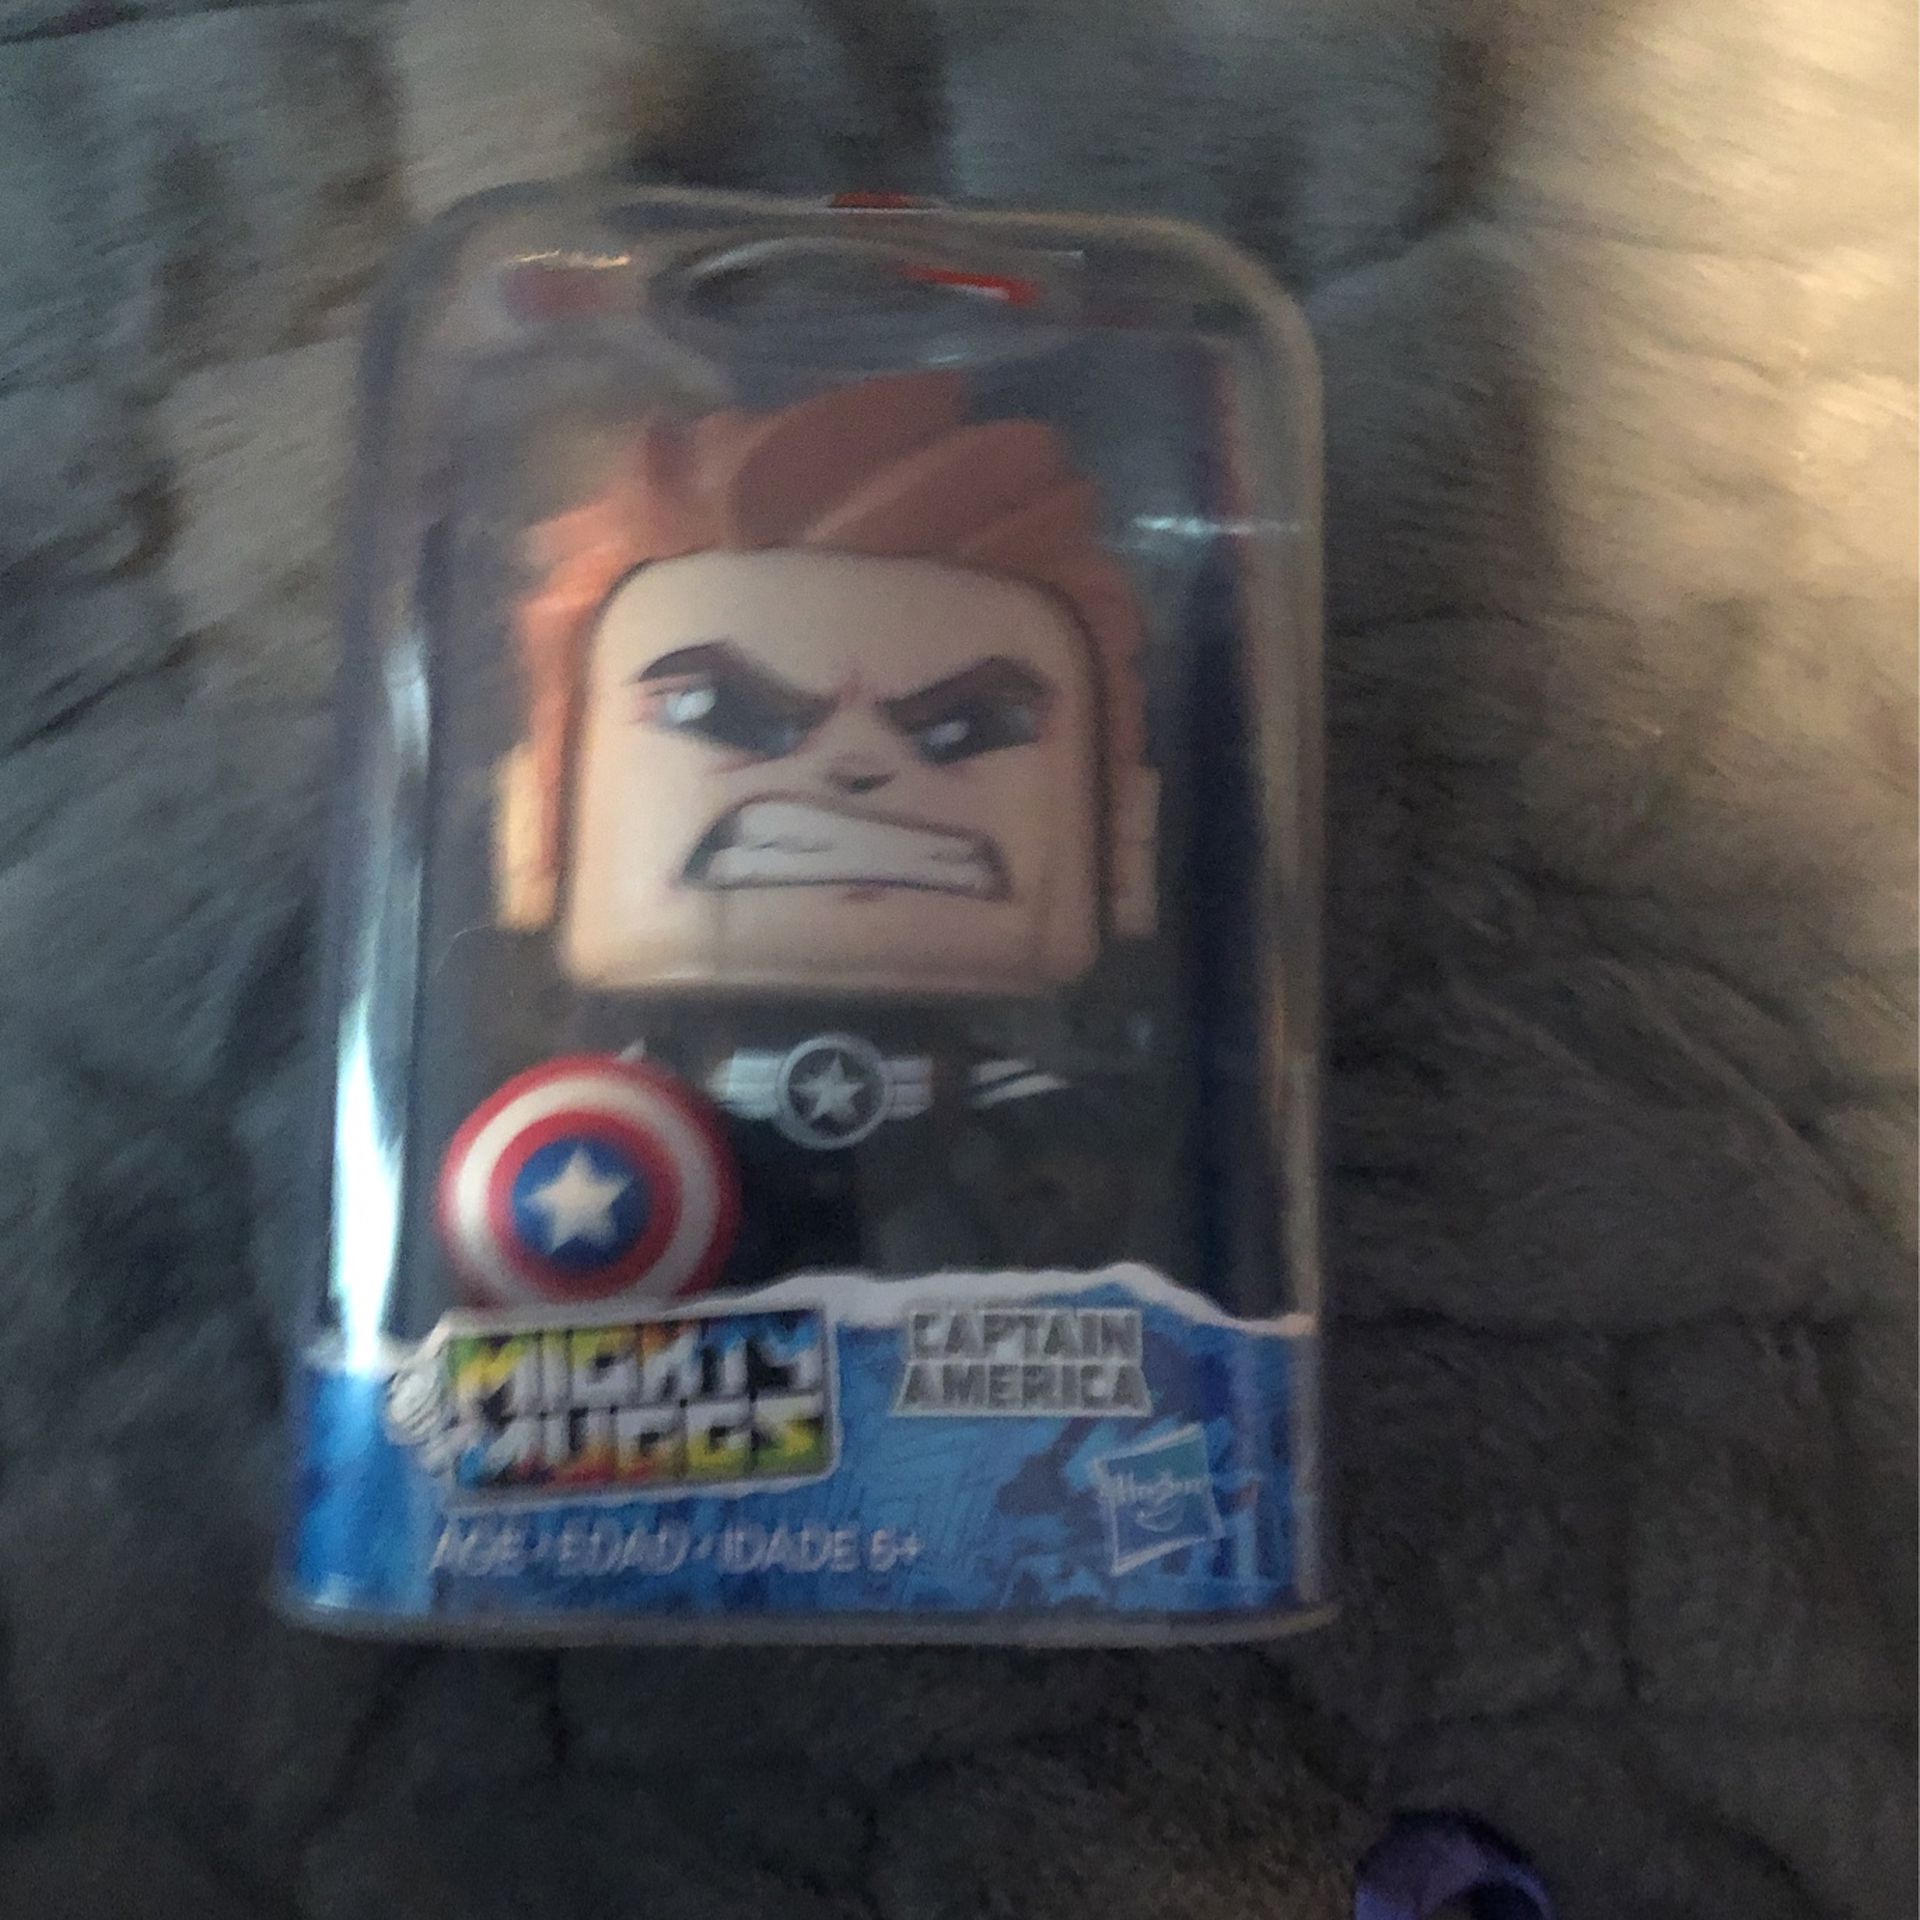 Captain America Mighty Mugg !